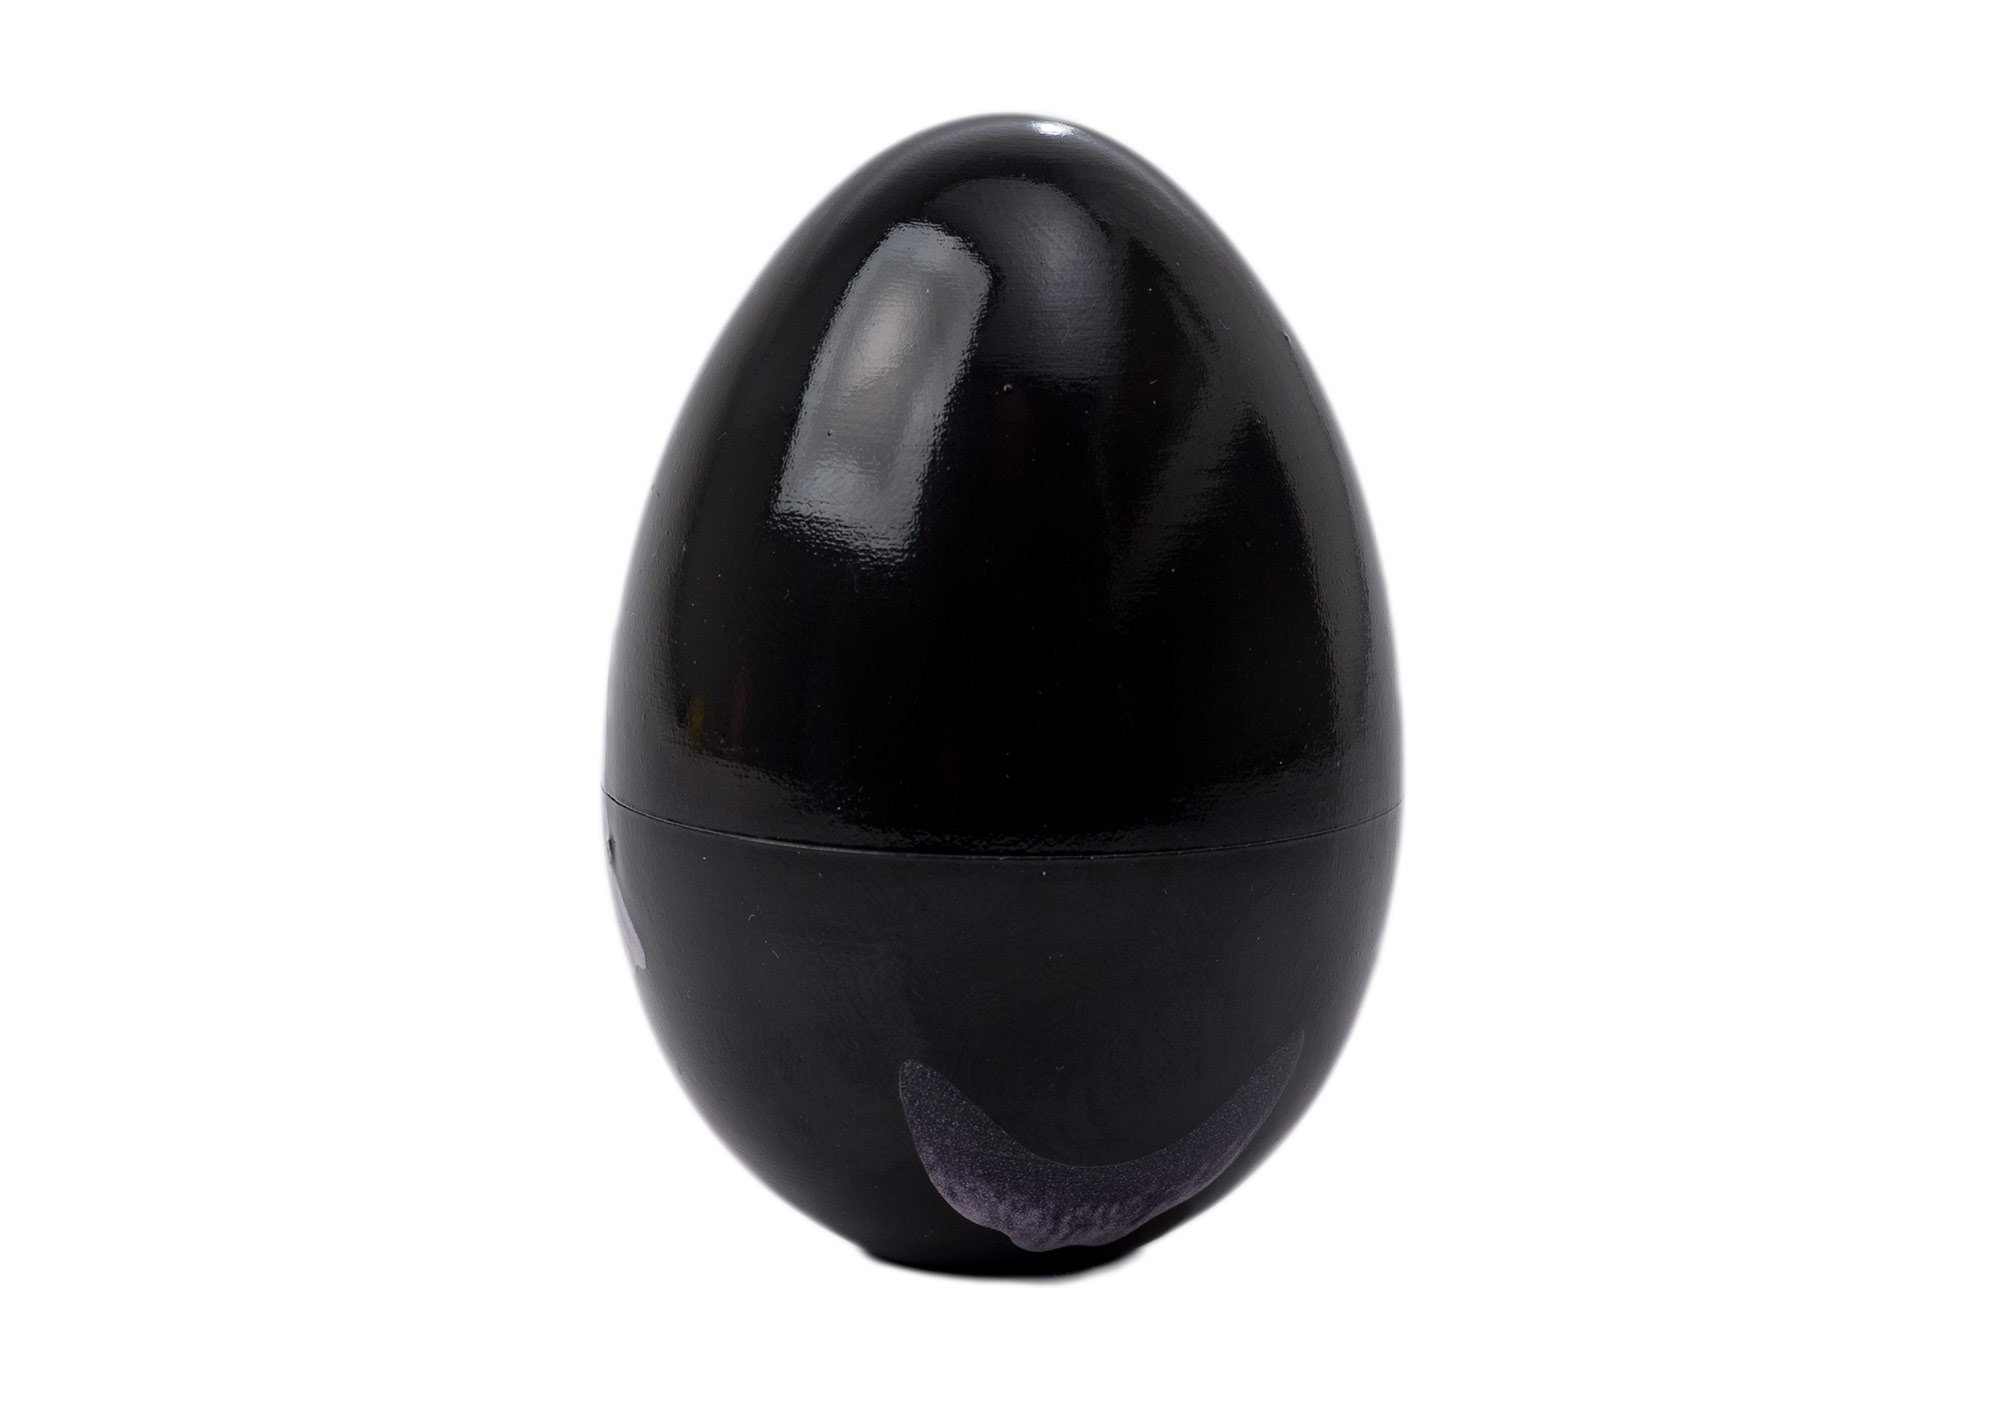 Buy Hollow Wooden Puffin Egg 2.75" at GoldenCockerel.com